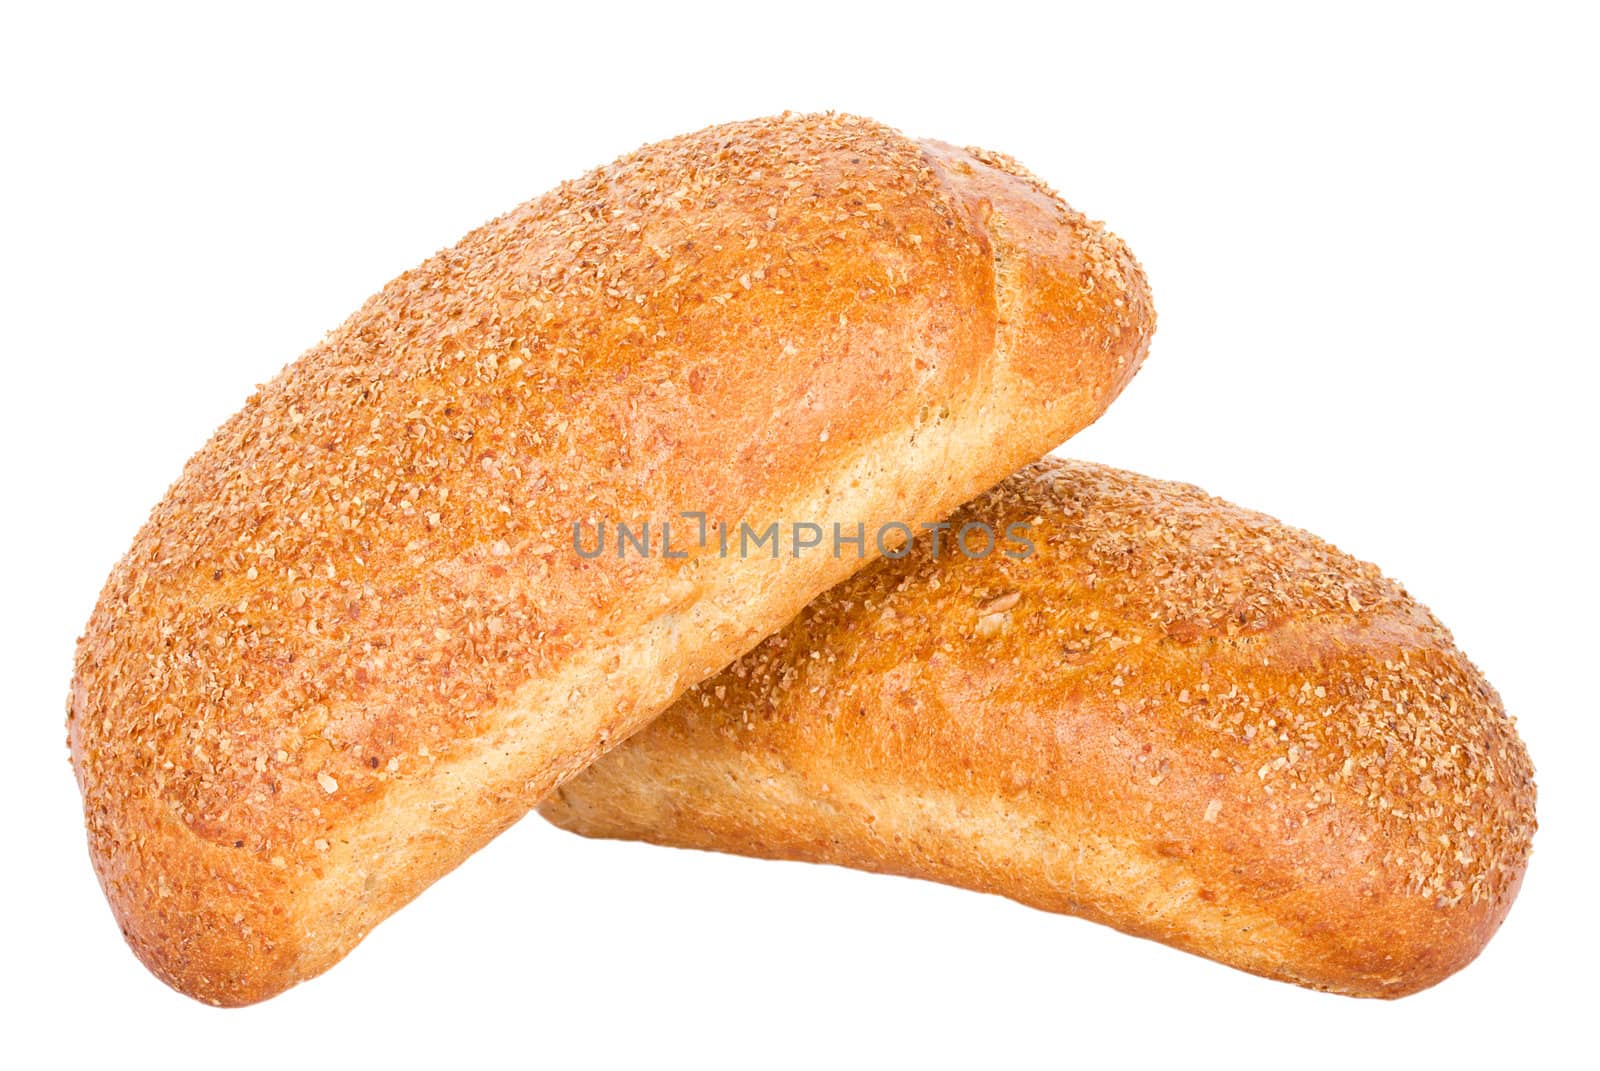 small loafs of bread by Alekcey